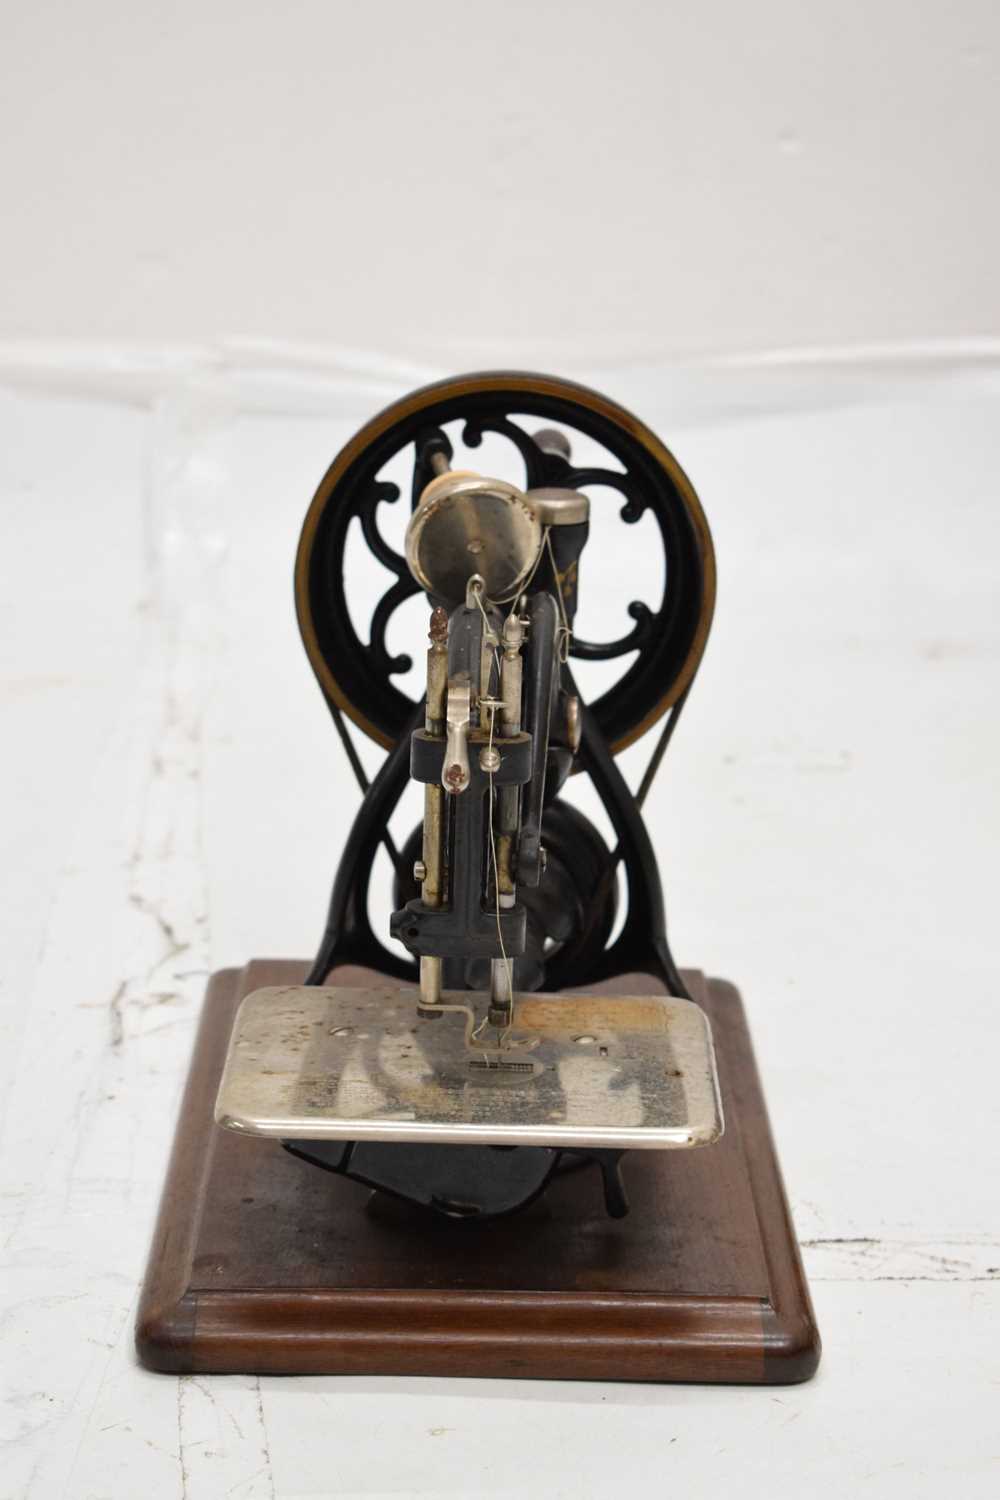 Late 19th century Willcox & Gibbs C-frame hand-cranked sewing machine - Image 5 of 9